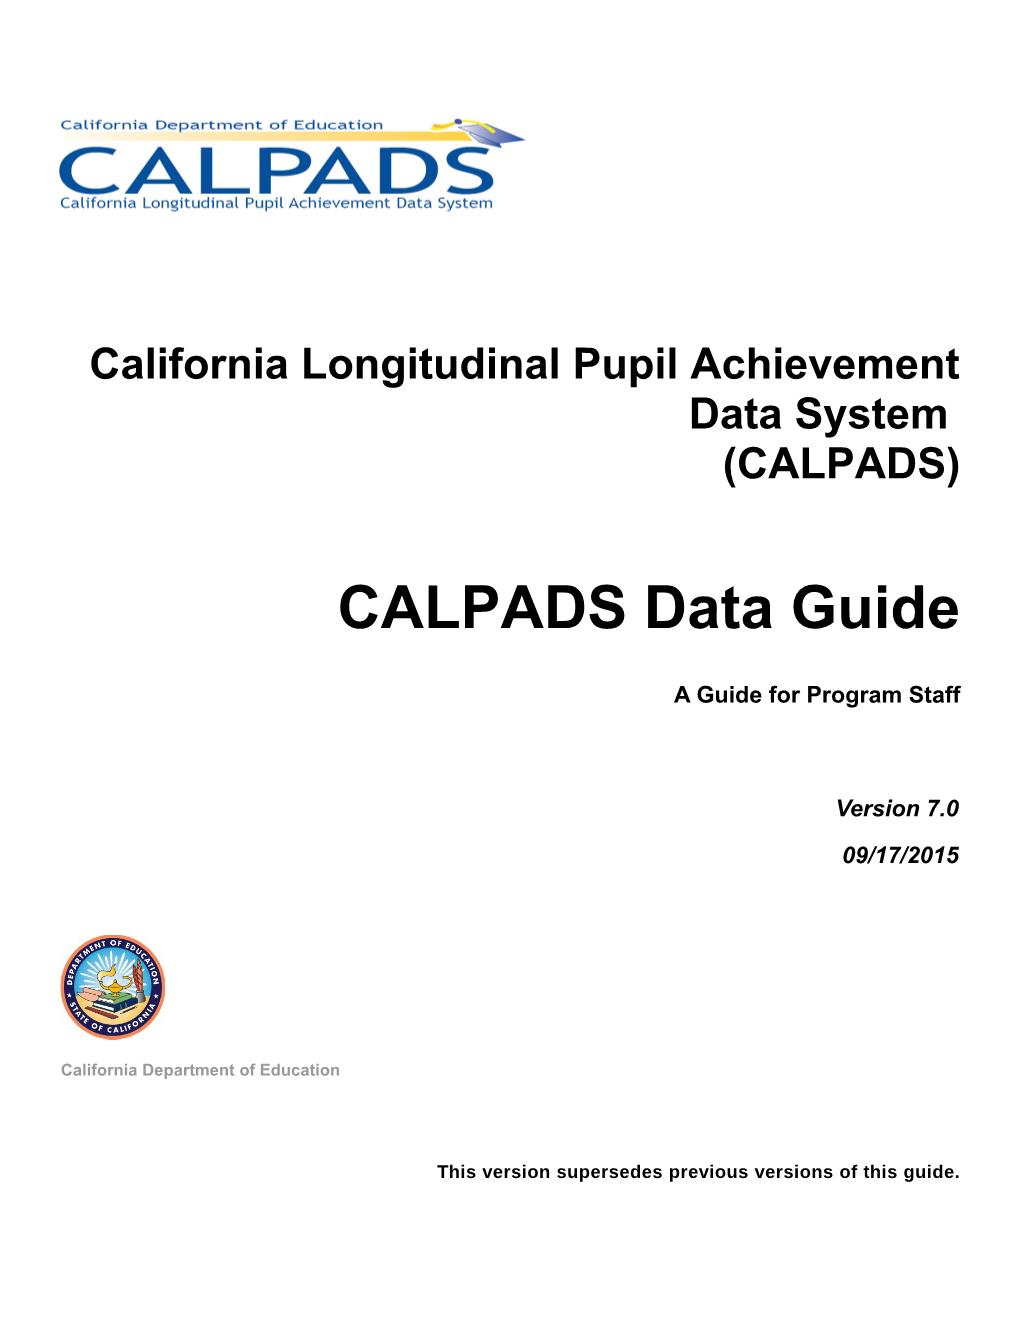 CALPADS Data Guide V7.0 - California Longitudinal Pupil Acheivement Data System (CALPADS)